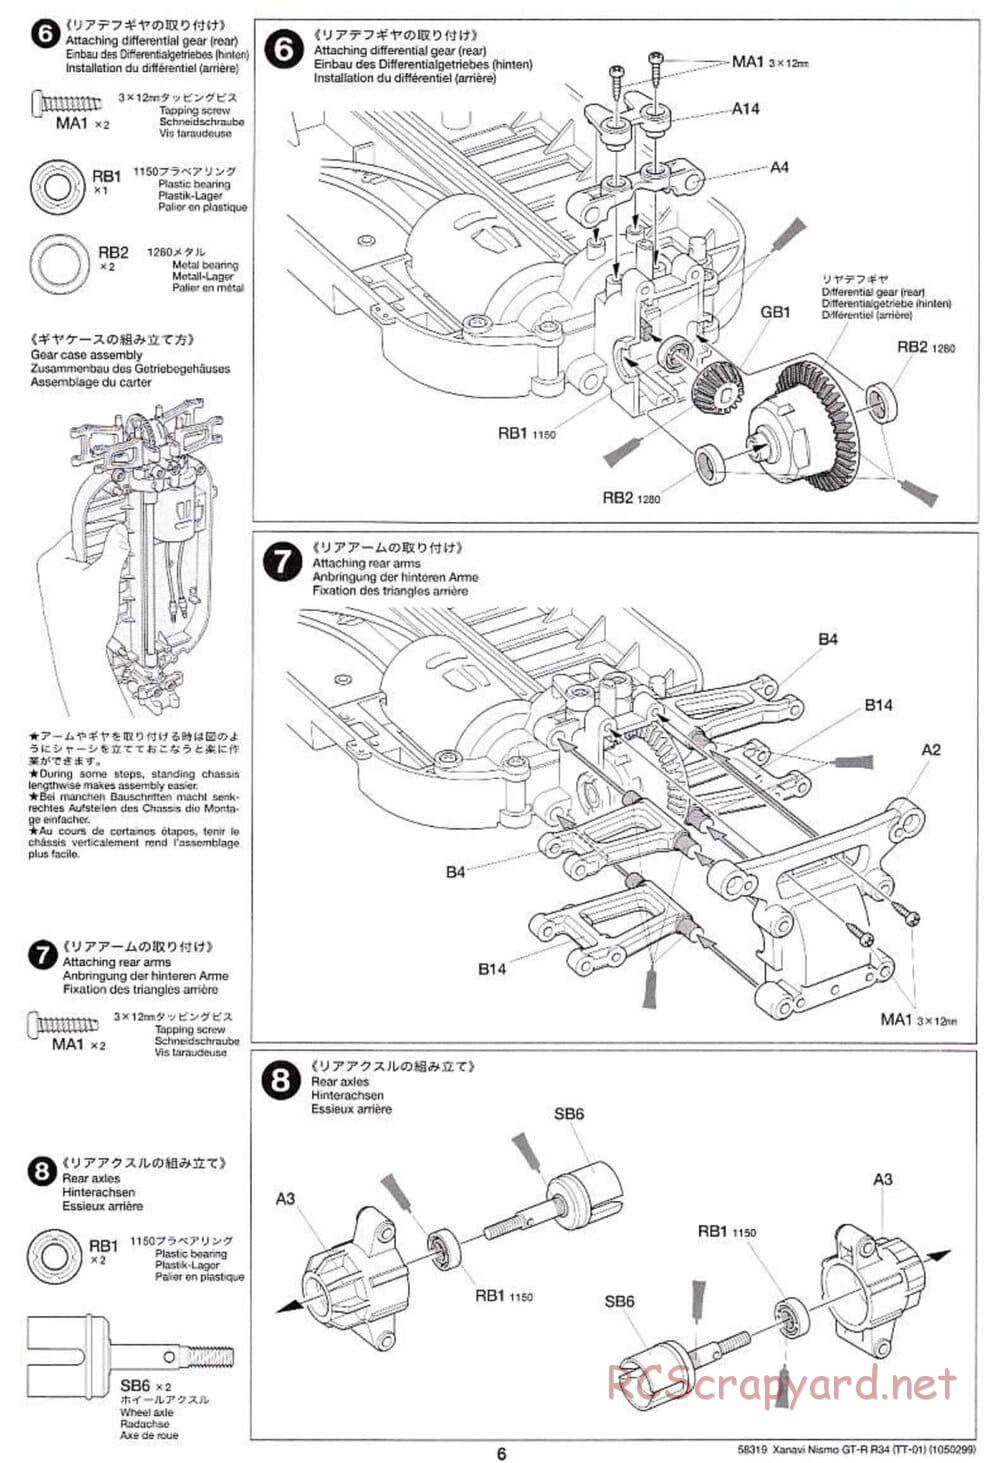 Tamiya - Xanavi Nismo GT-R R34 - TT-01 Chassis - Manual - Page 6